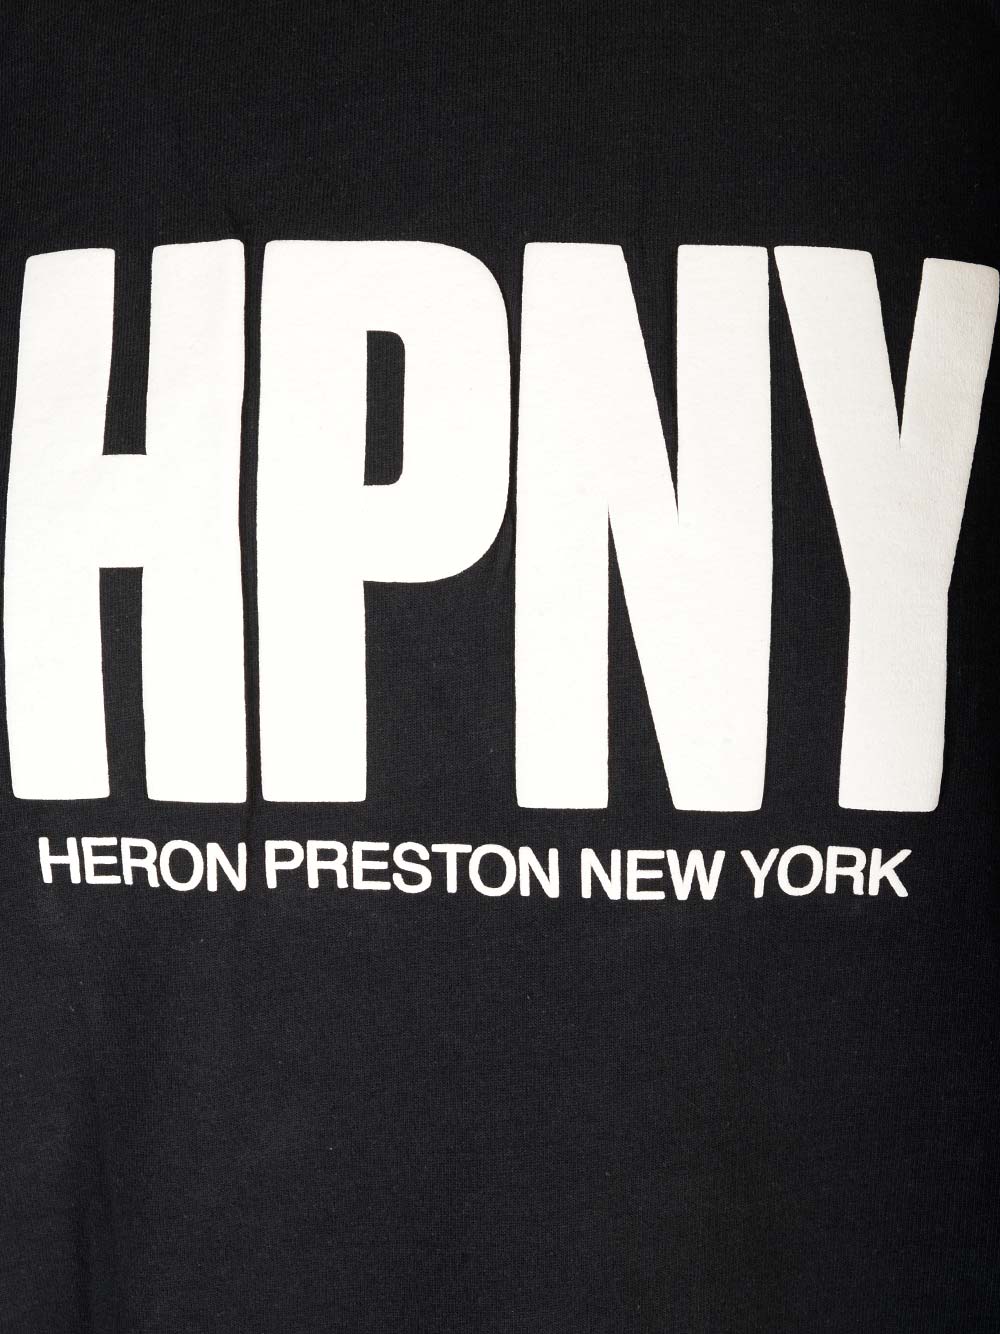 Shop Heron Preston Black Hpny T-shirt